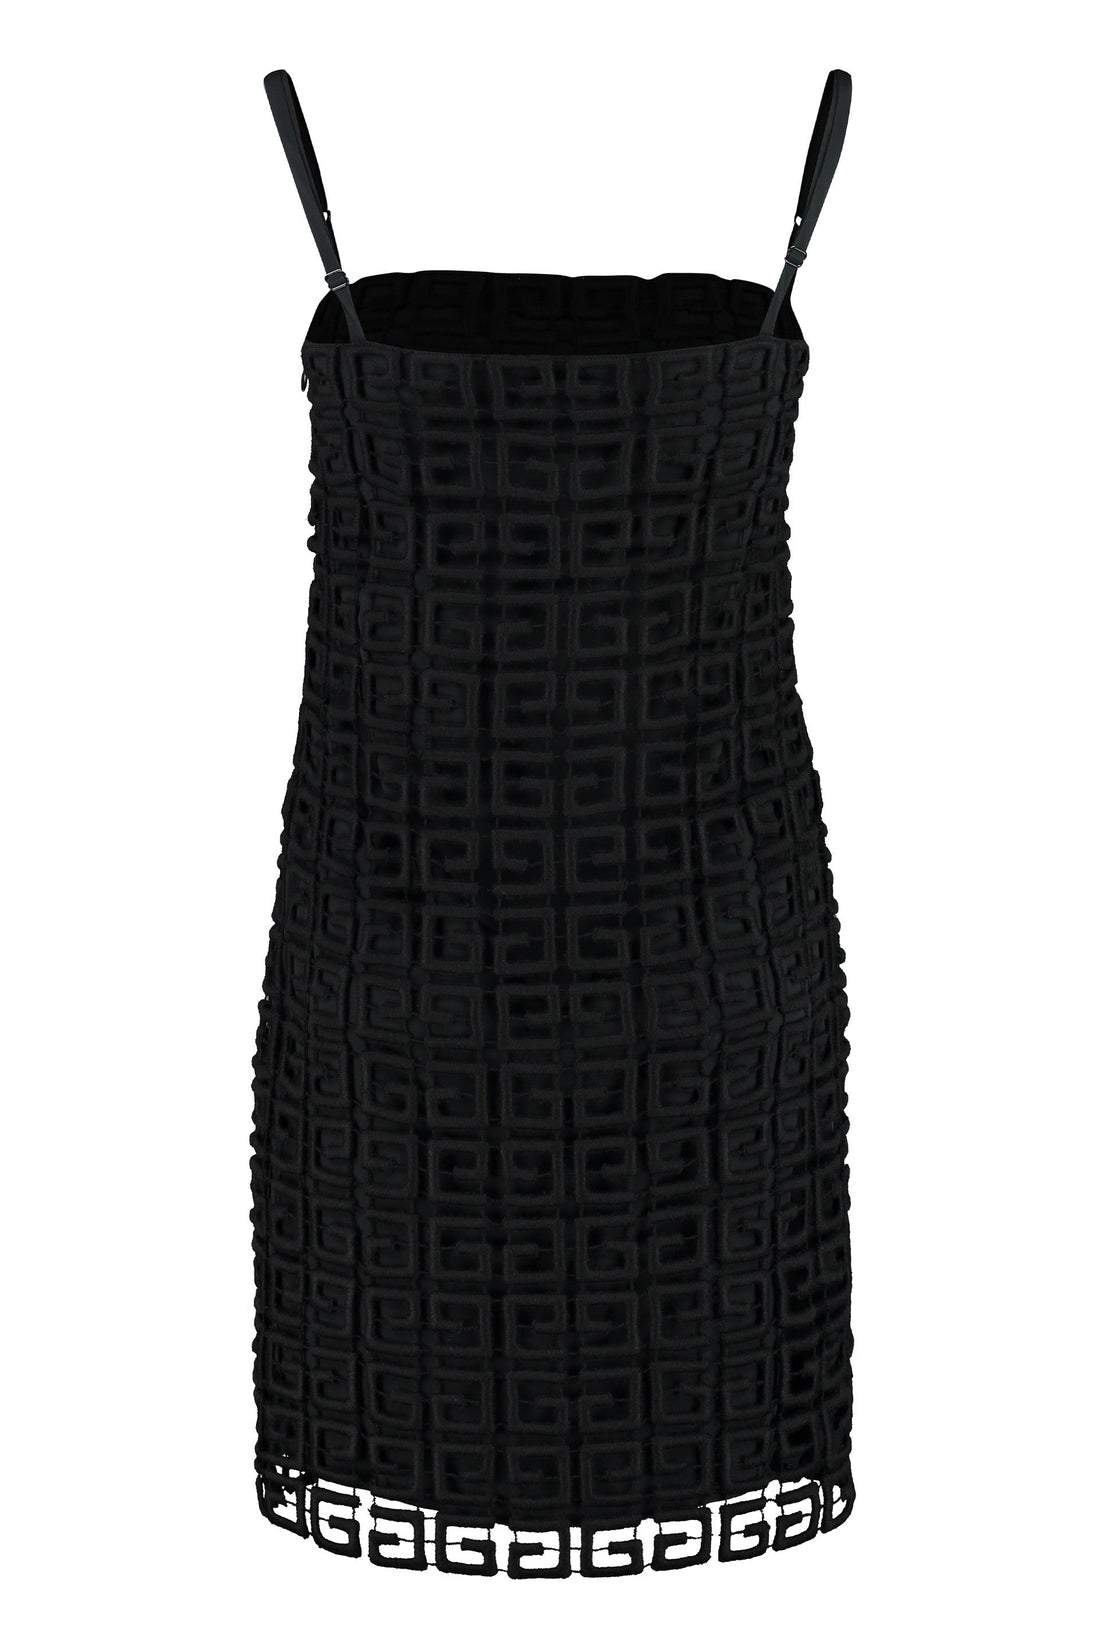 Givenchy-OUTLET-SALE-4G openwork-knit dress-ARCHIVIST